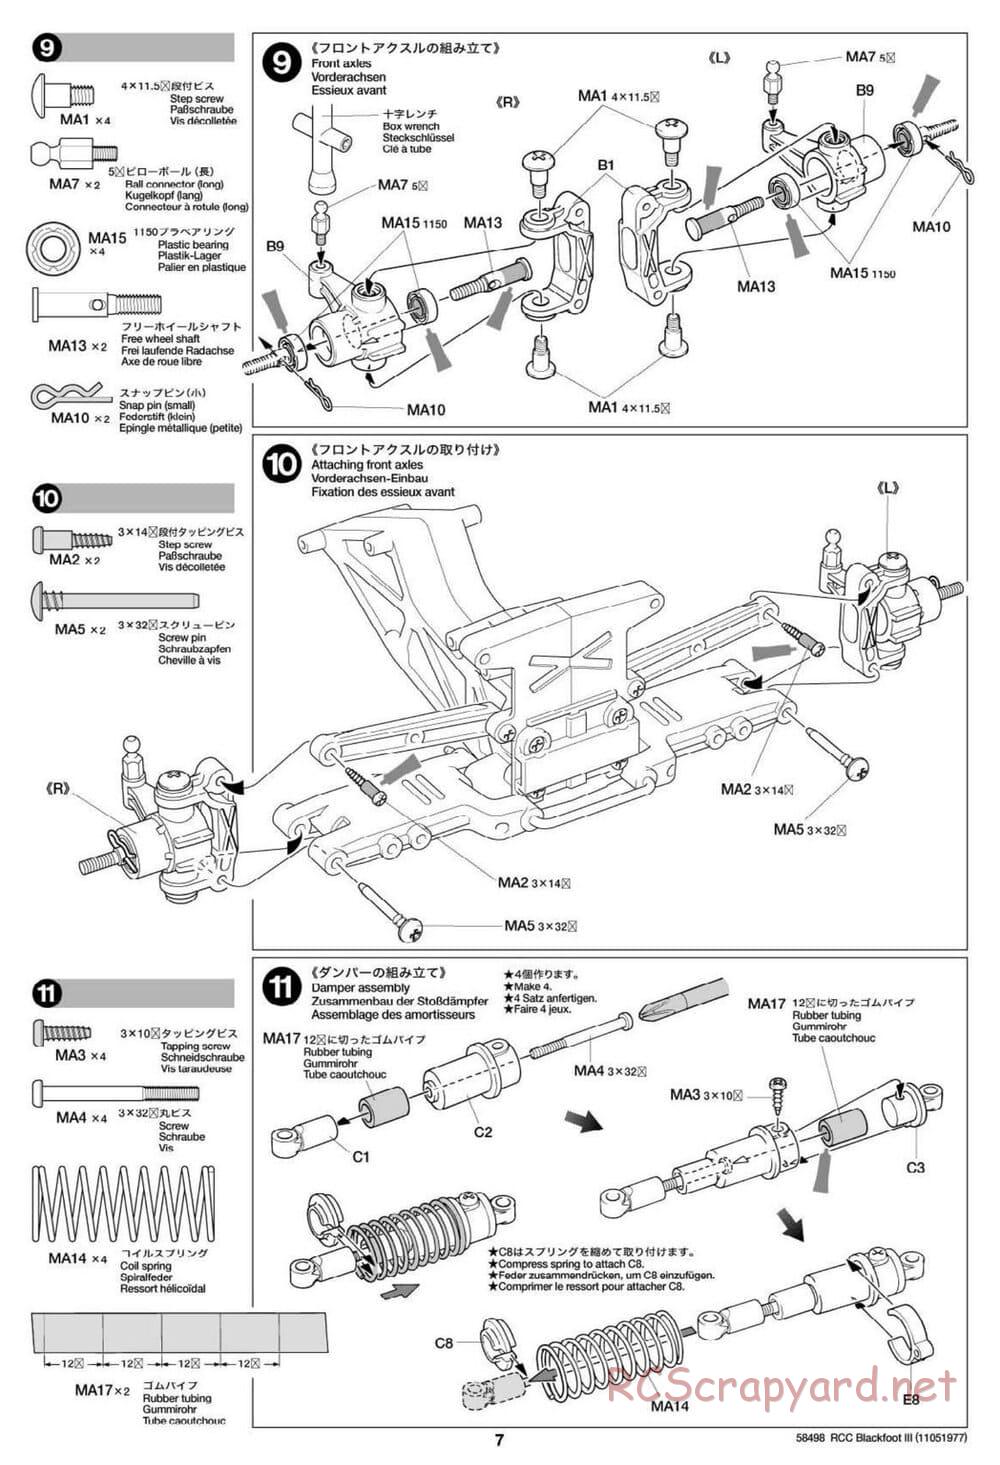 Tamiya - Blackfoot III - WT-01 Chassis - Manual - Page 7